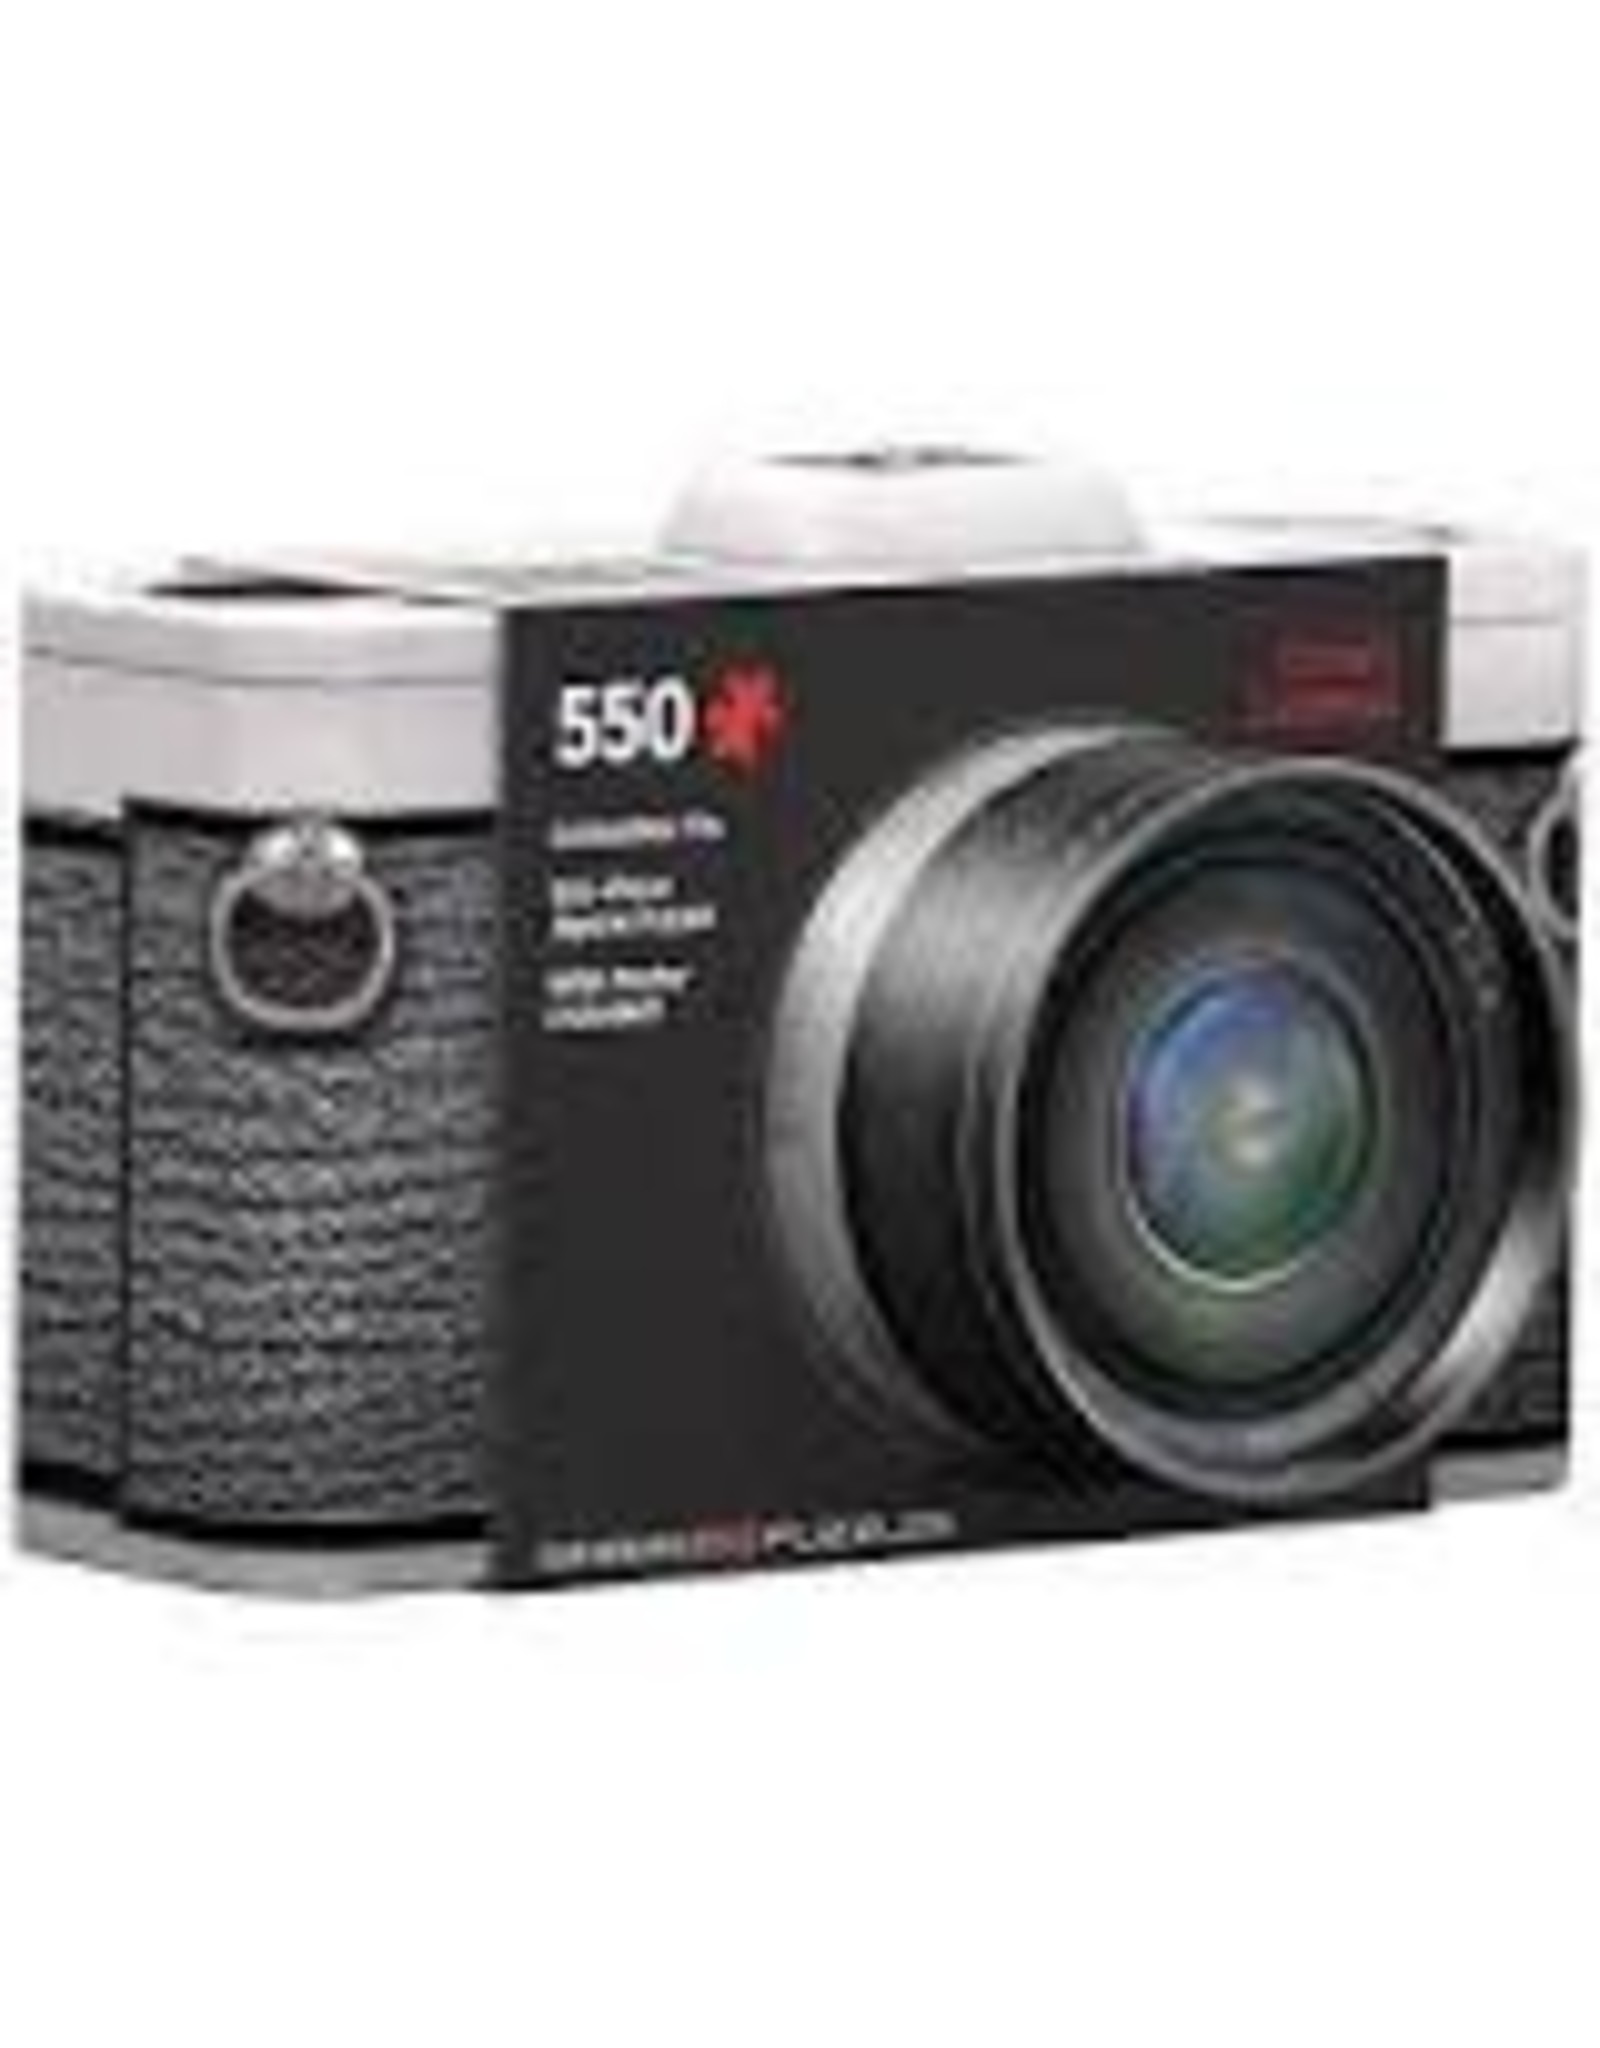 Classic Camera 550 pc